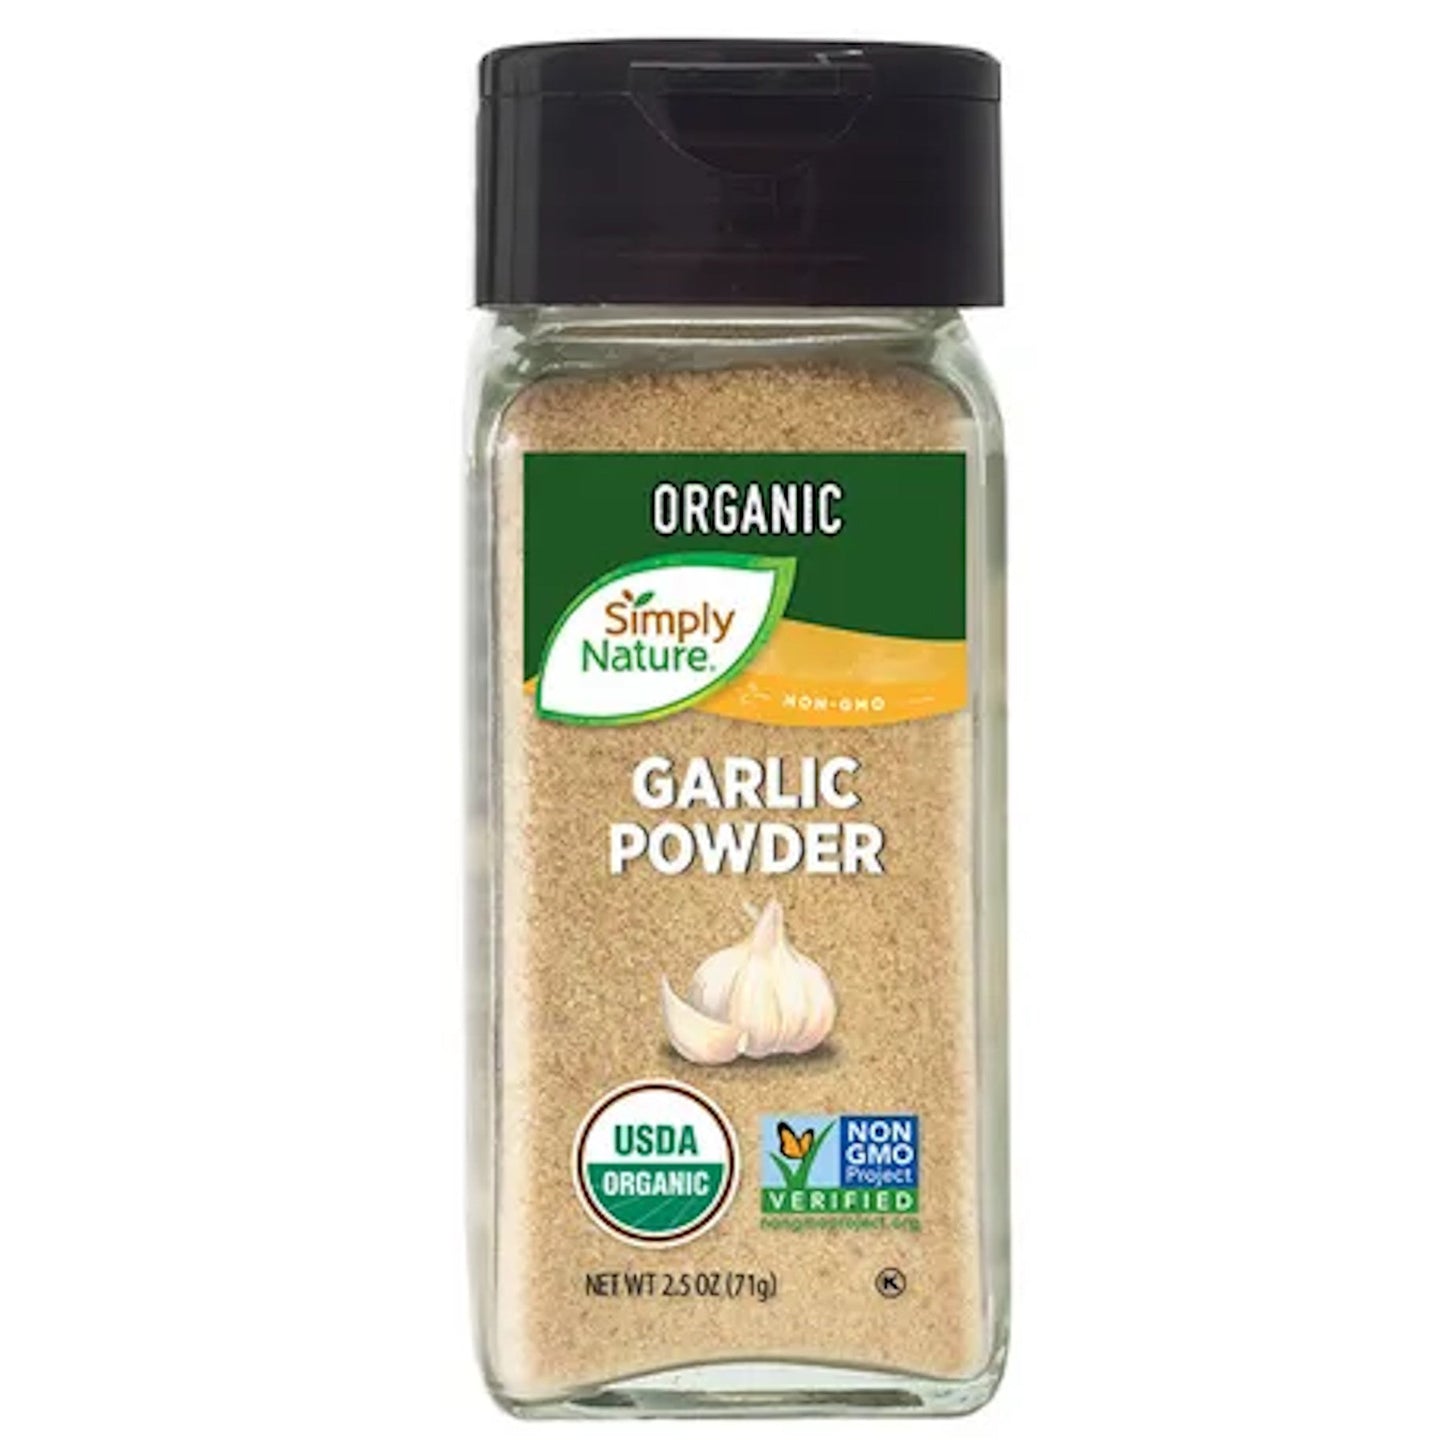 Simply Nature Organic Garlic Powder 2.5 oz - FlavorKicker.com